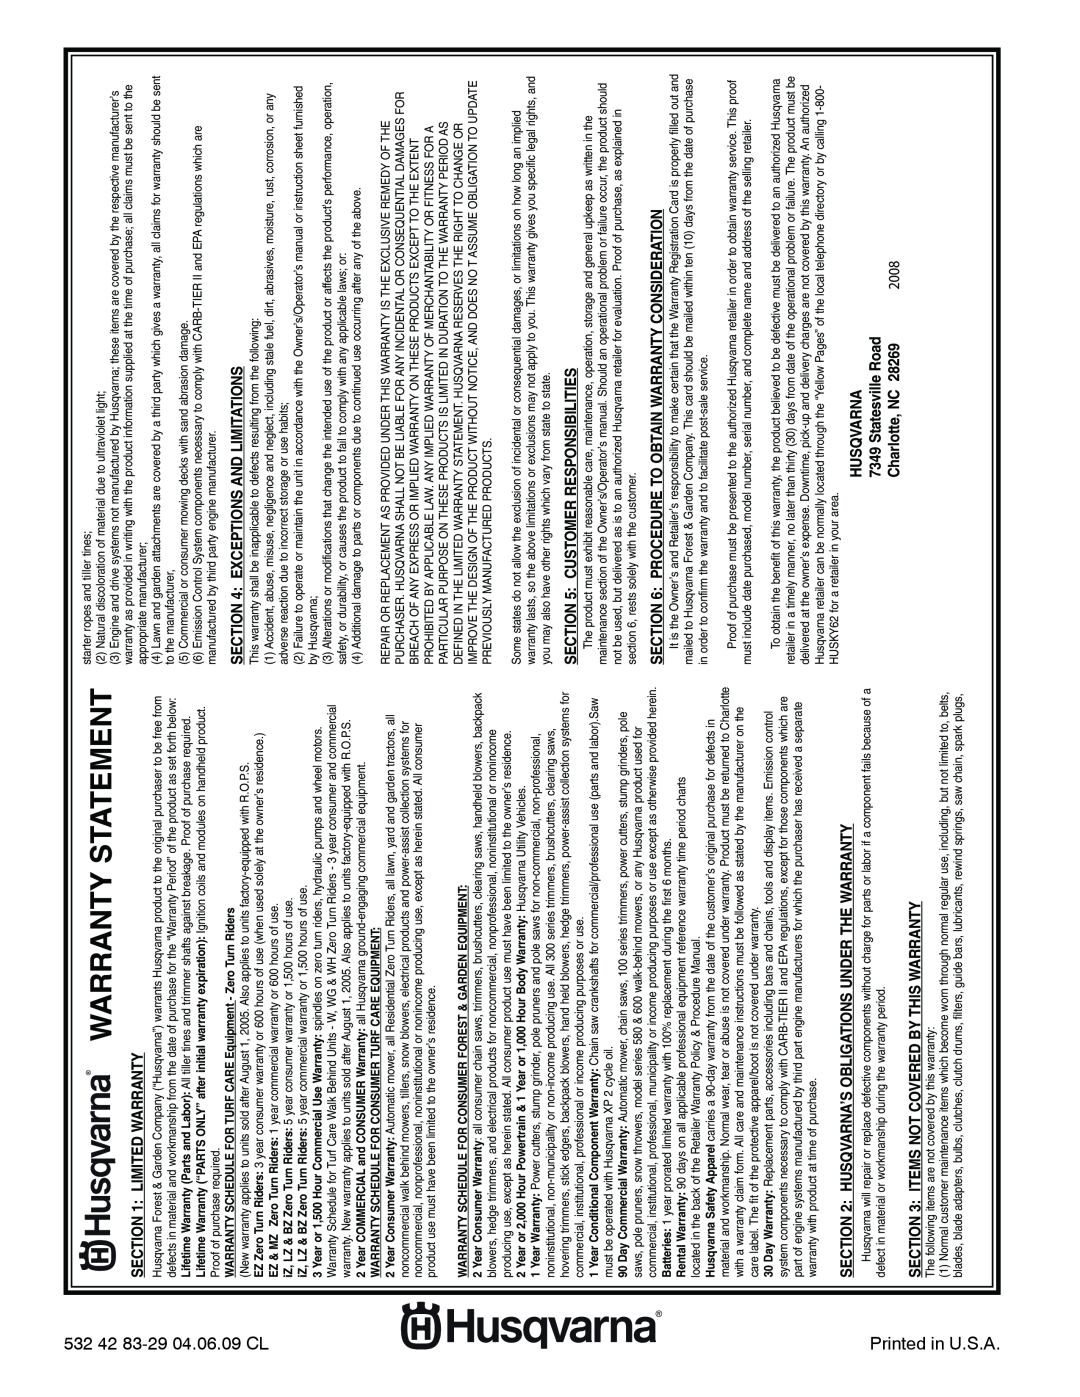 Husqvarna DRT 900 Warranty Statement, 2008, Charlotte, NC, WARRANTY SCHEDULE FOR TURF CARE Equipment - Zero Turn Riders 